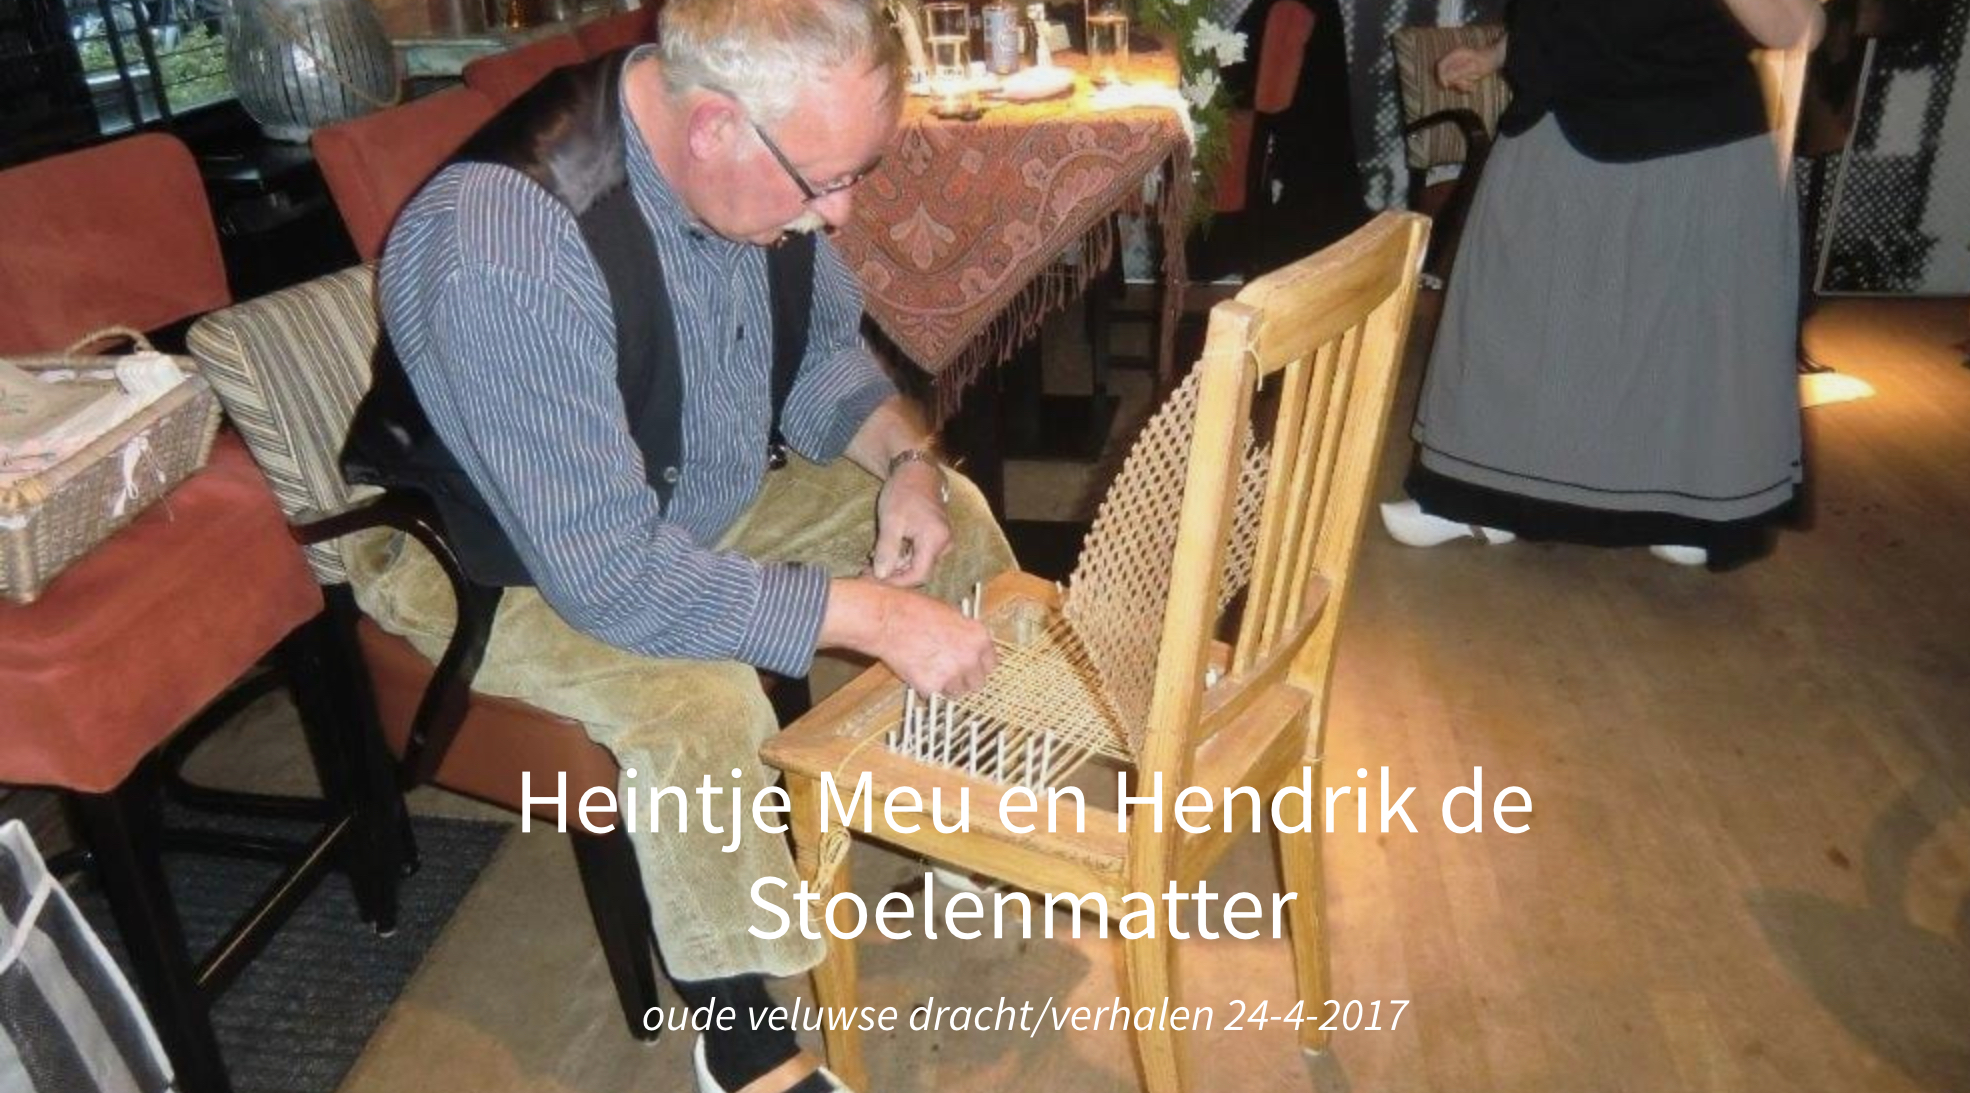 Heintje meu en Hendrik de stoelenmatter 24-4-2017